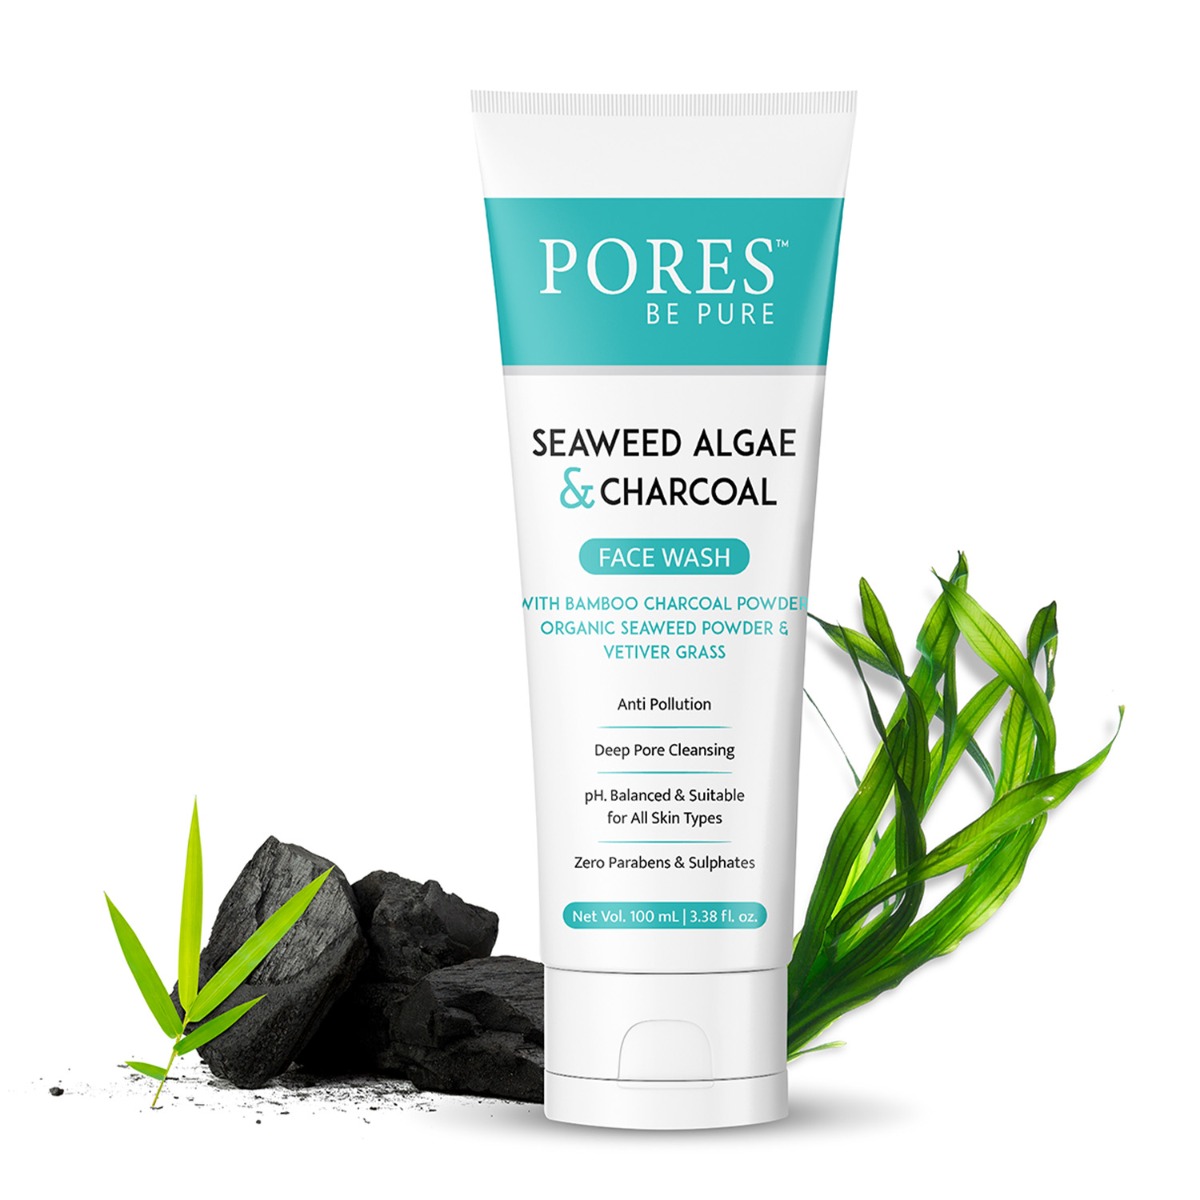 PORES Be Pure Seaweed Algae & Charcoal Face Wash, 100ml